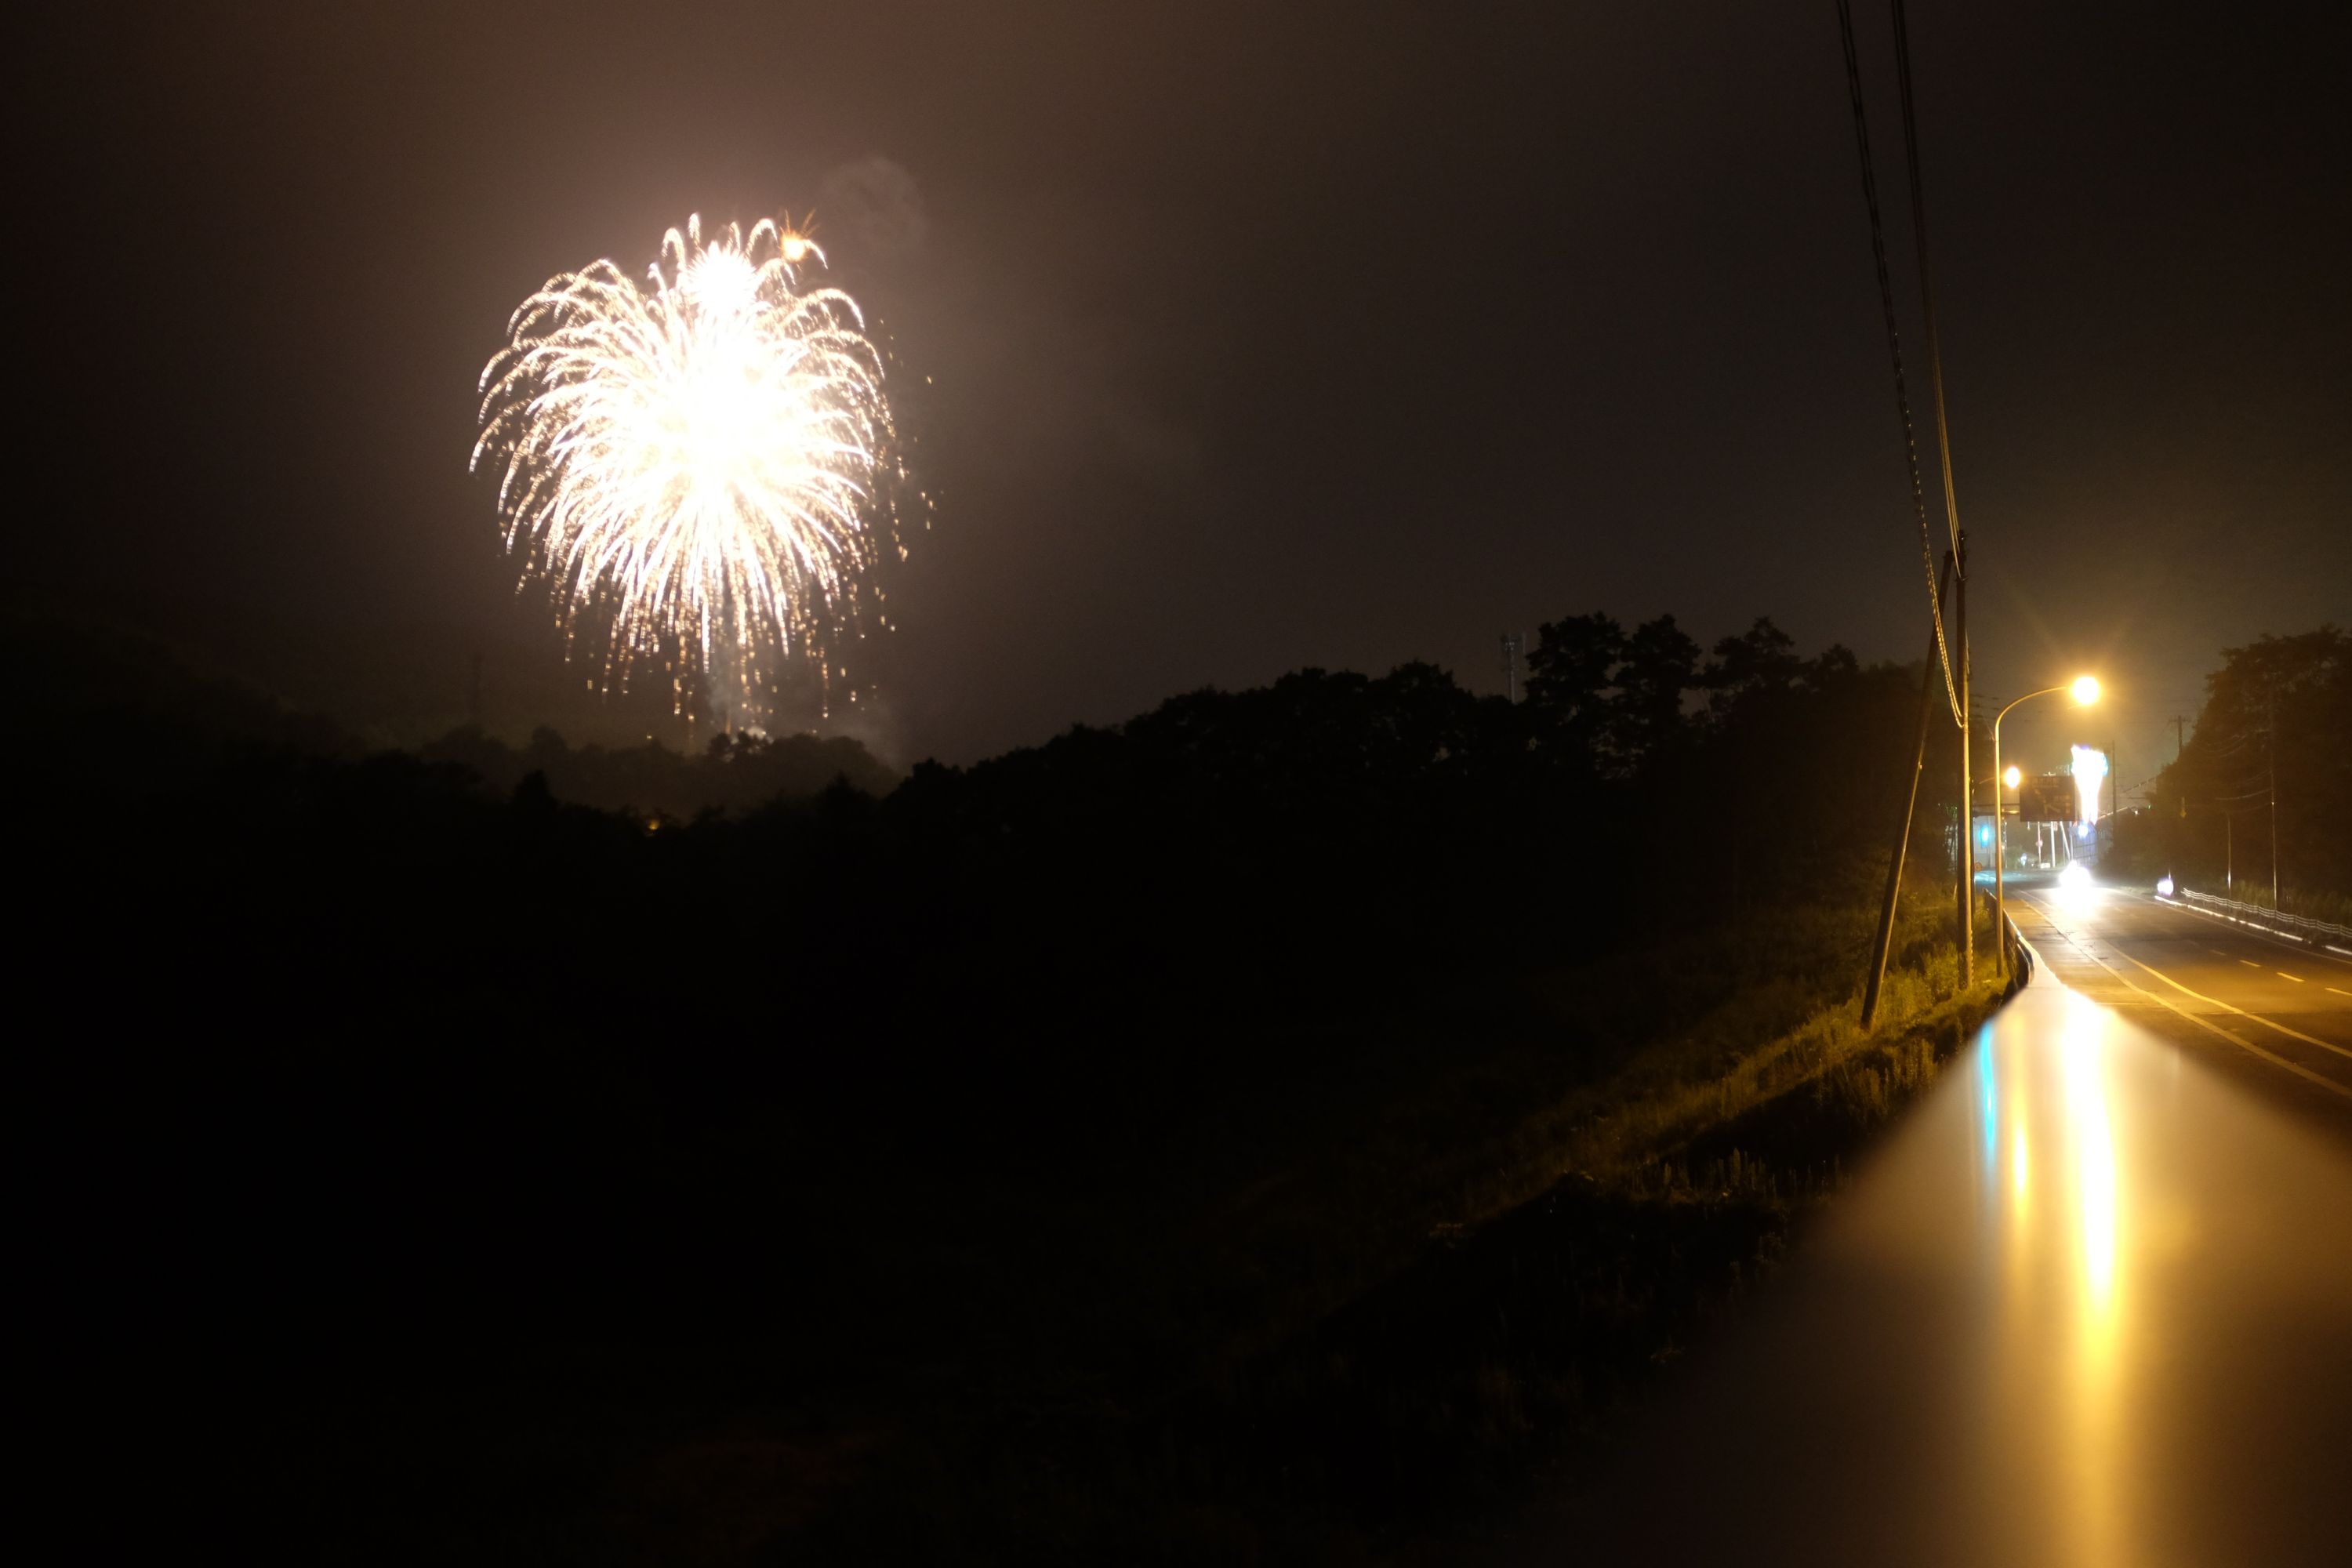 Fireworks exploding above a dark forest.